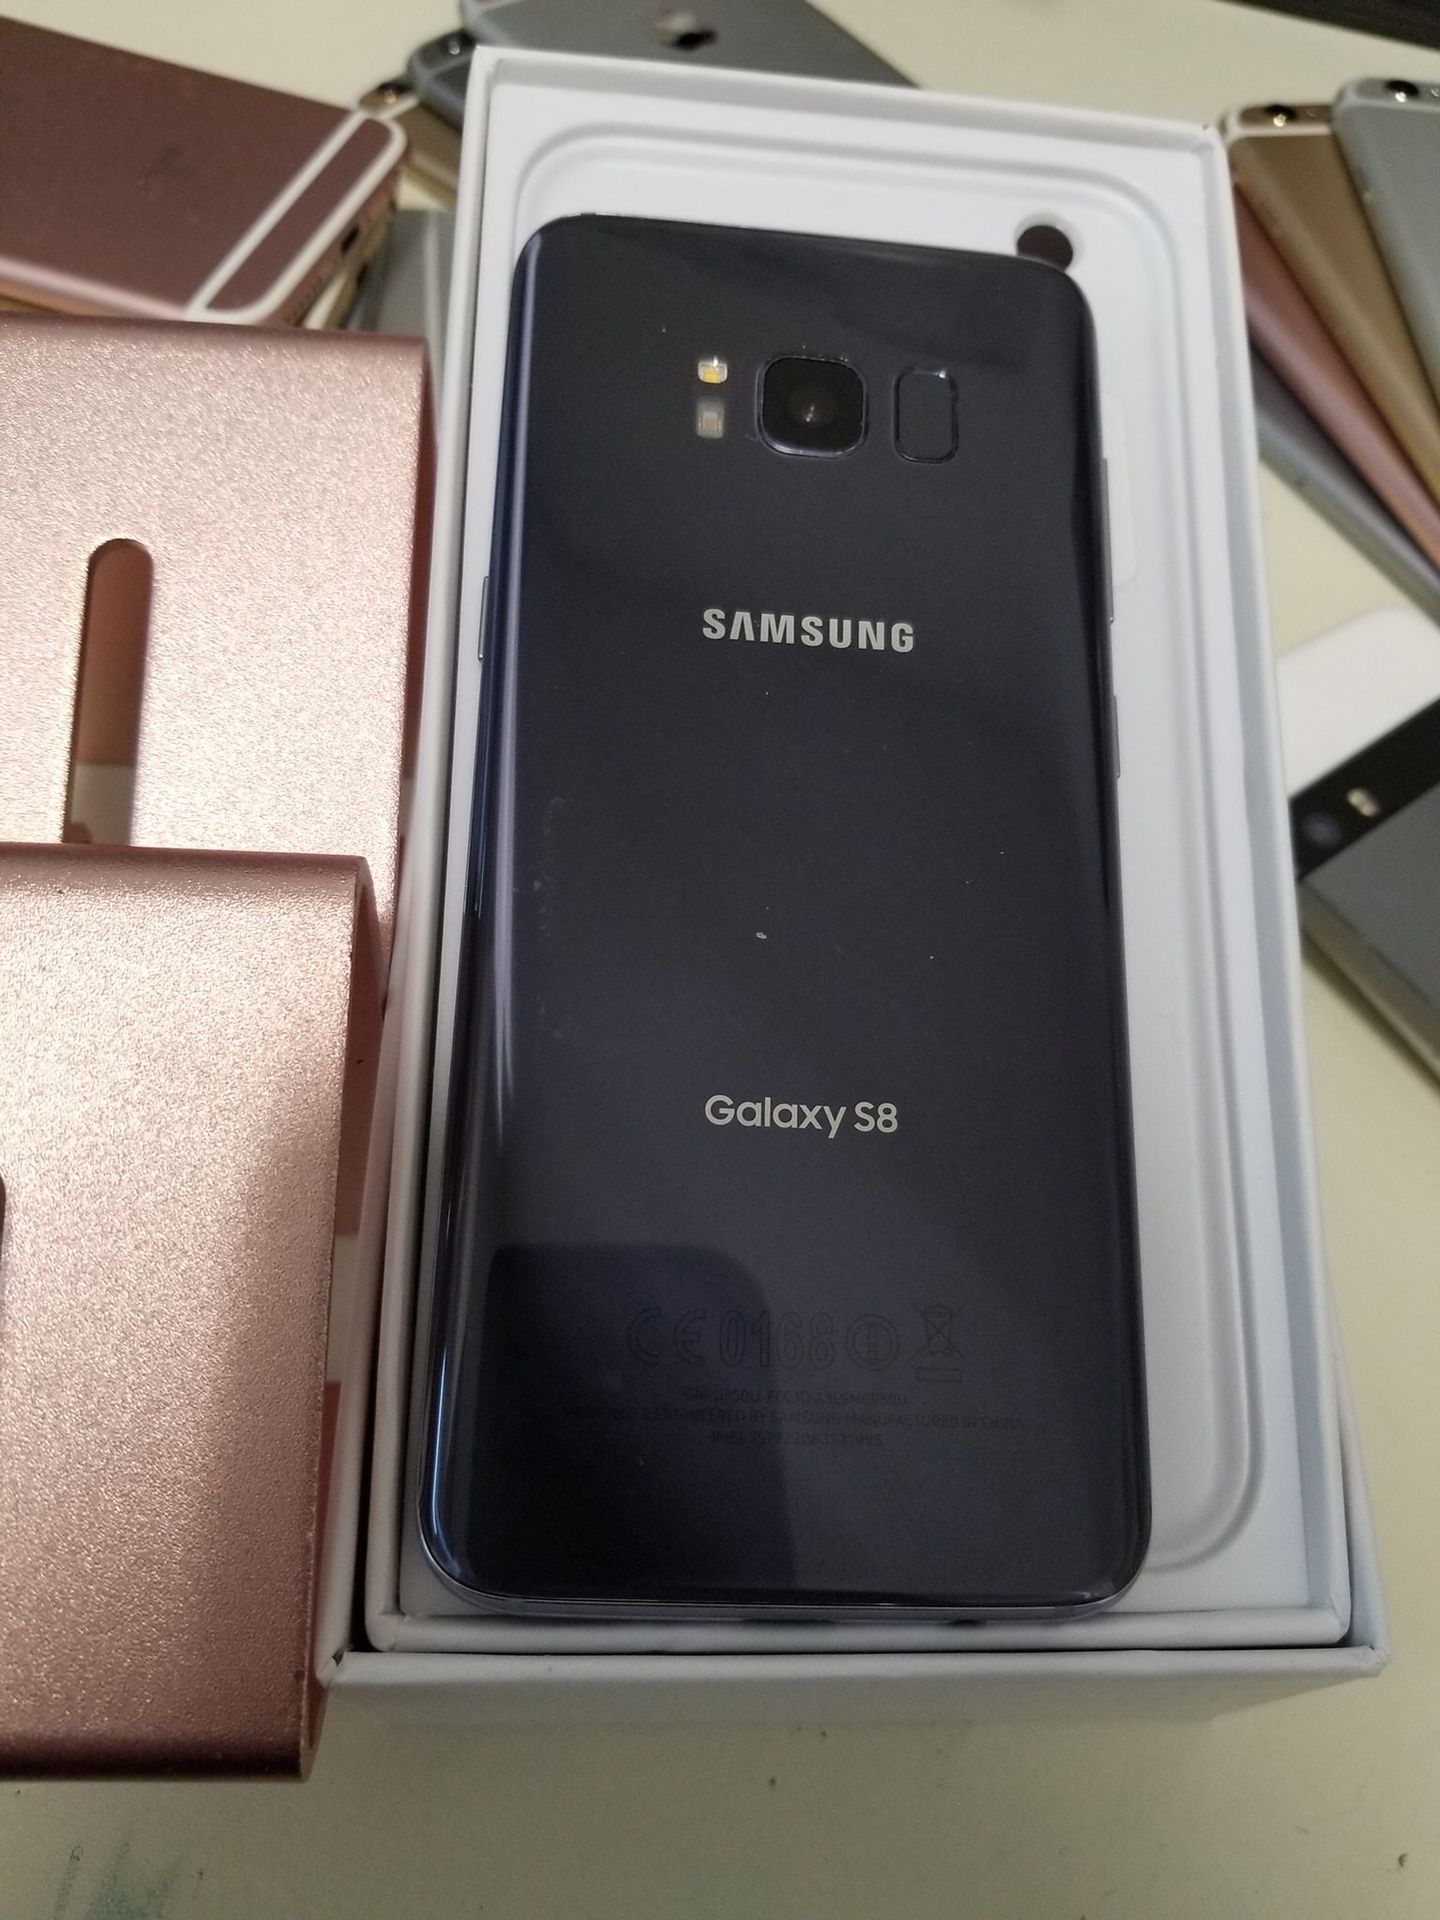 Samsung Galaxy S8 (64 GB) Excellent Condition With Warranty